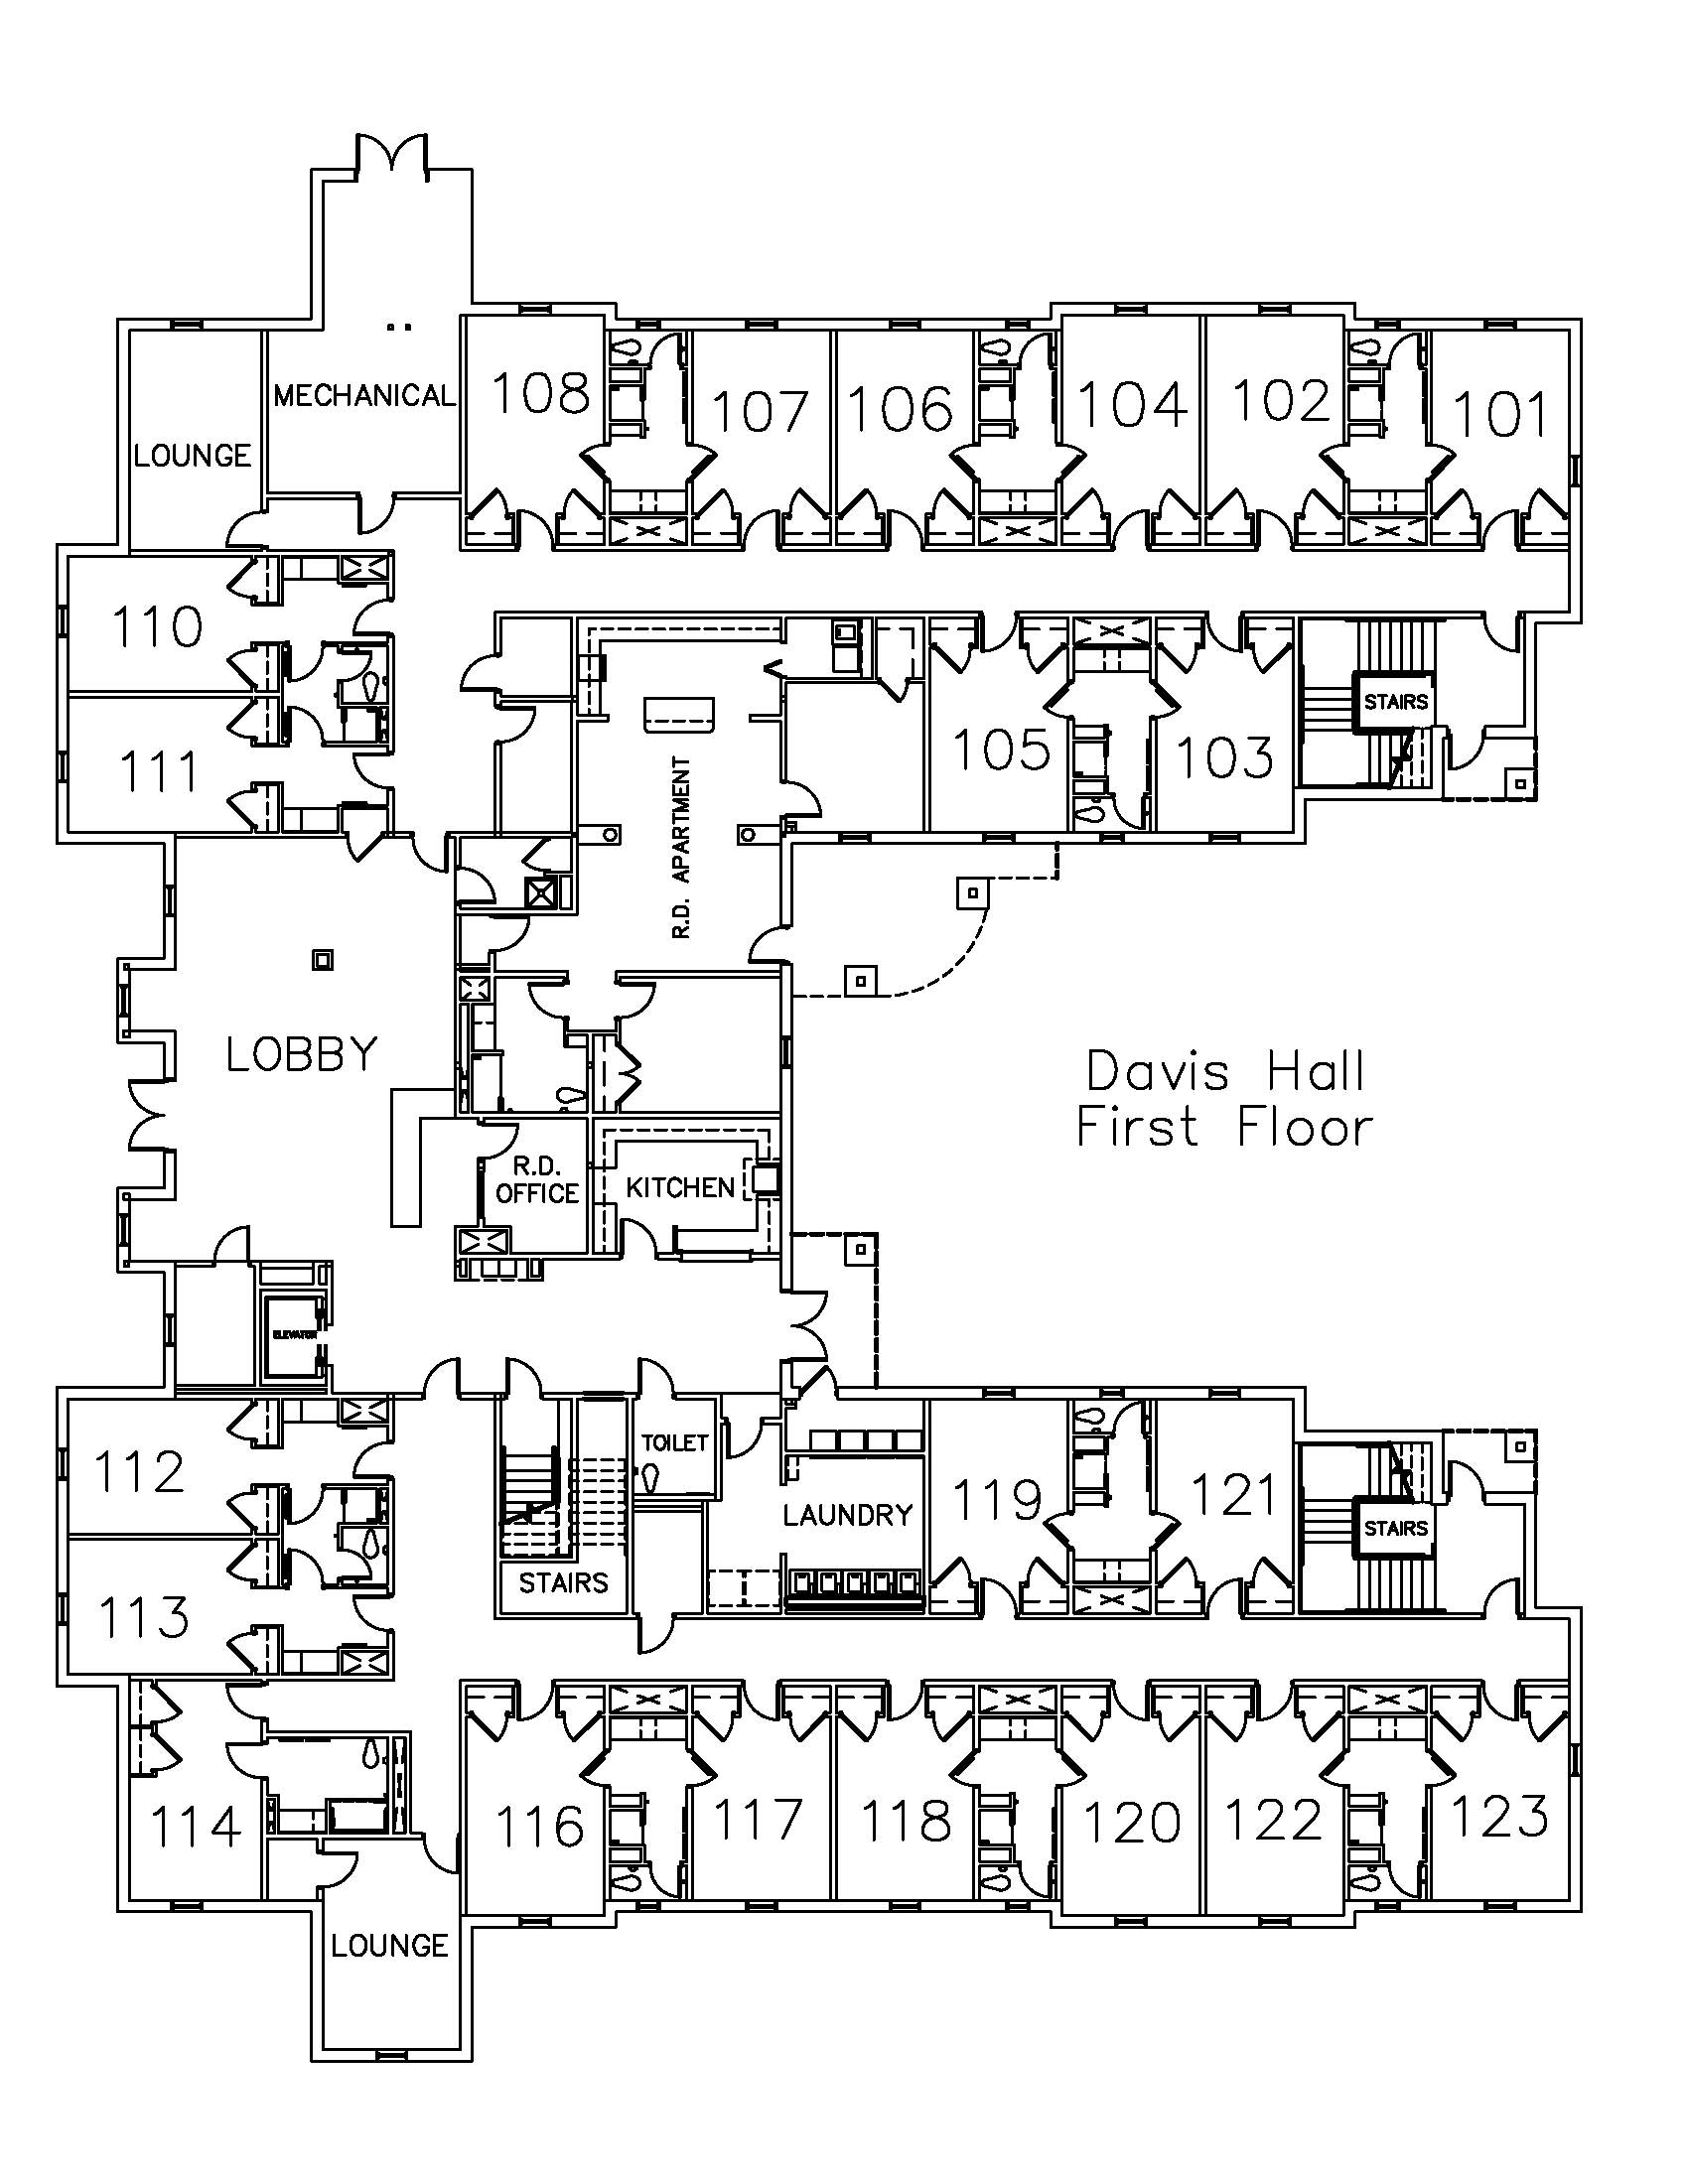 Davis Hall First Floor